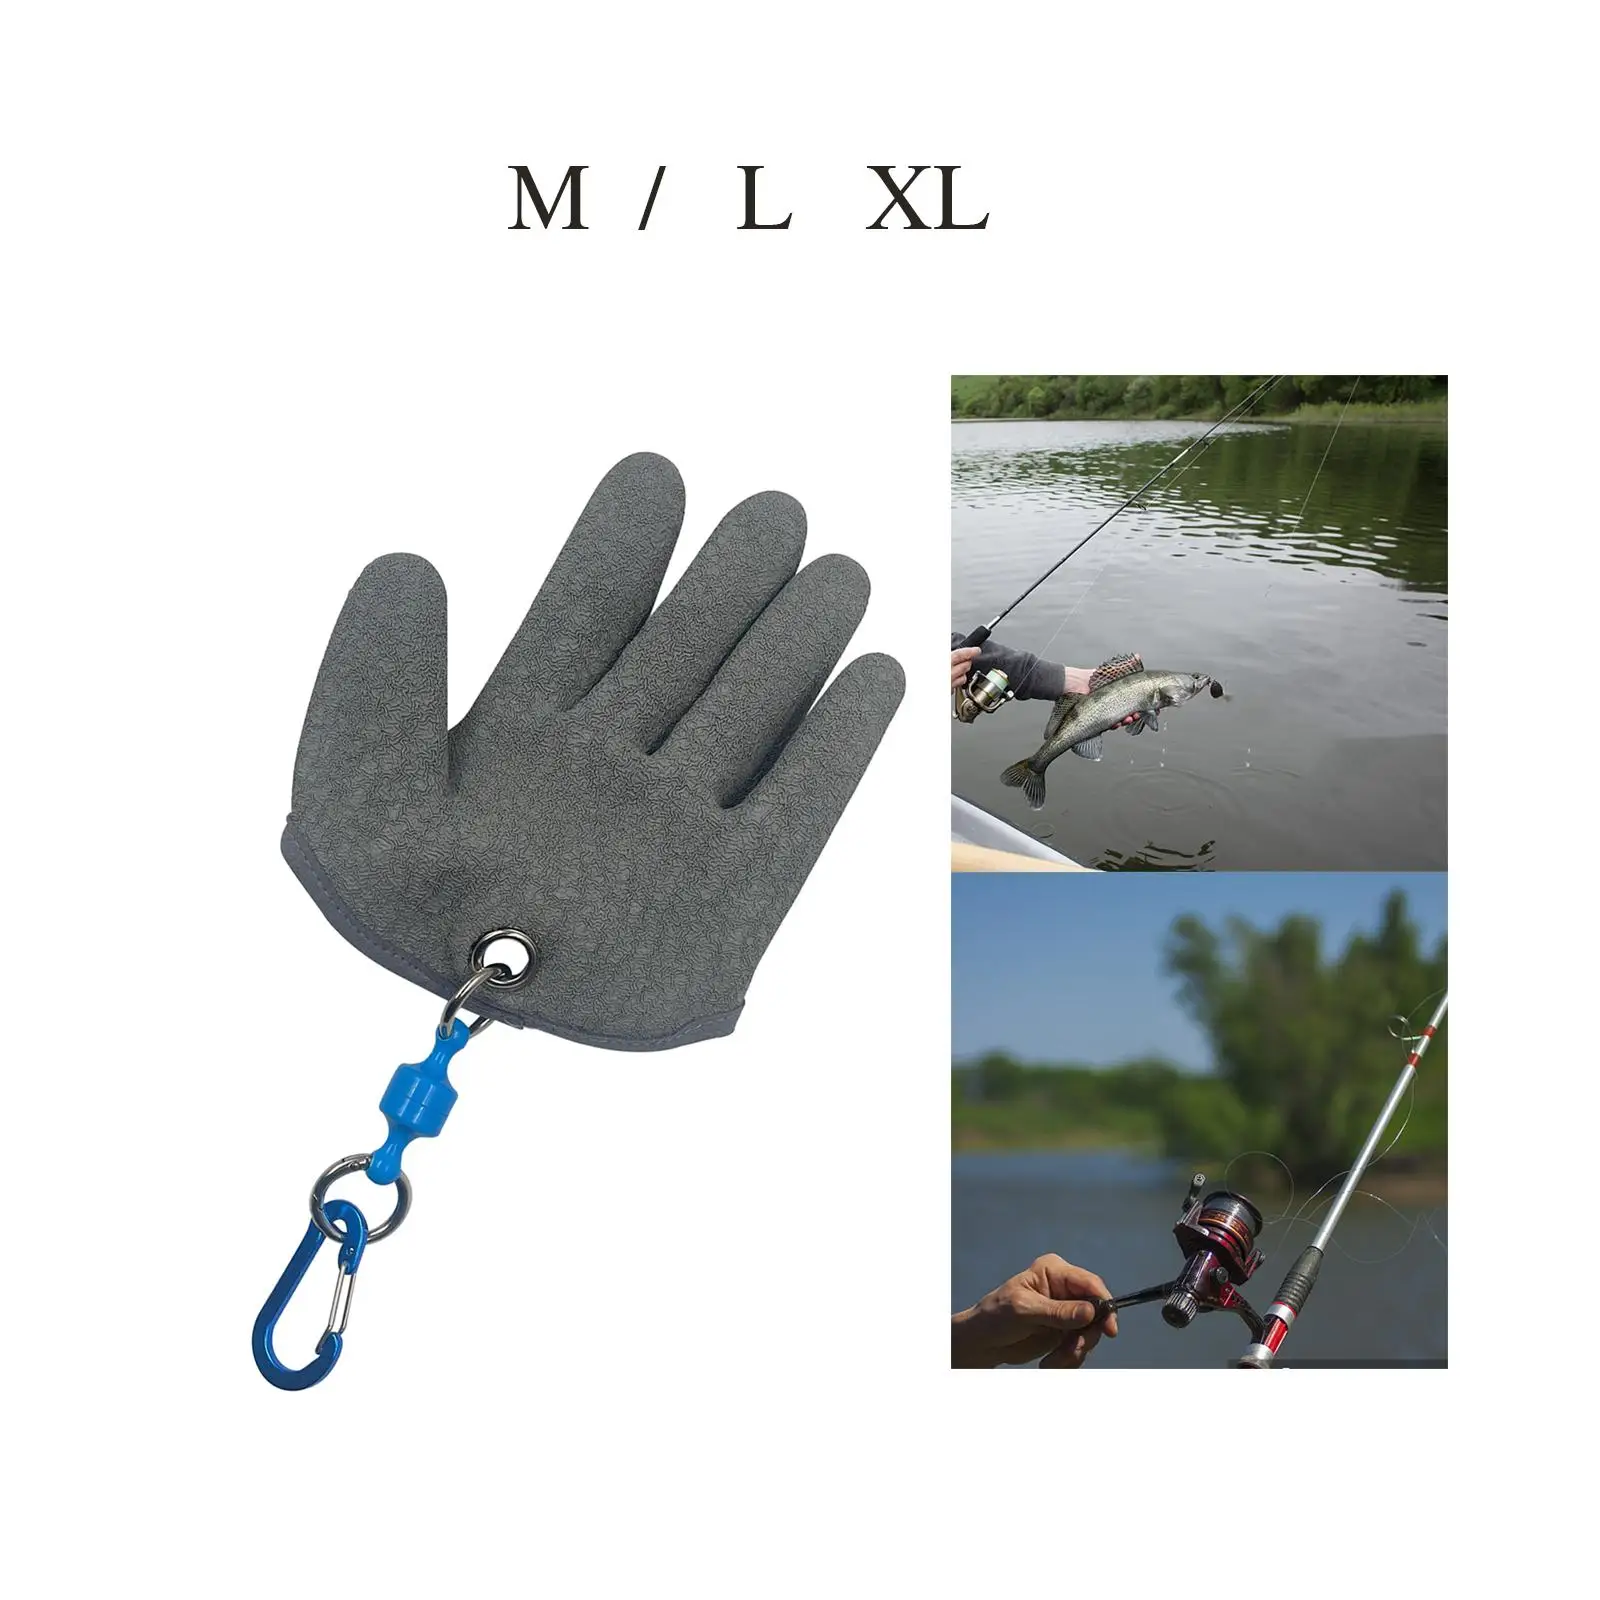 Left Hand Fish Glove Puncture Resistant Anti Slip Water Resistant Fishing Glove for Gardening Outdoor Activities Catching